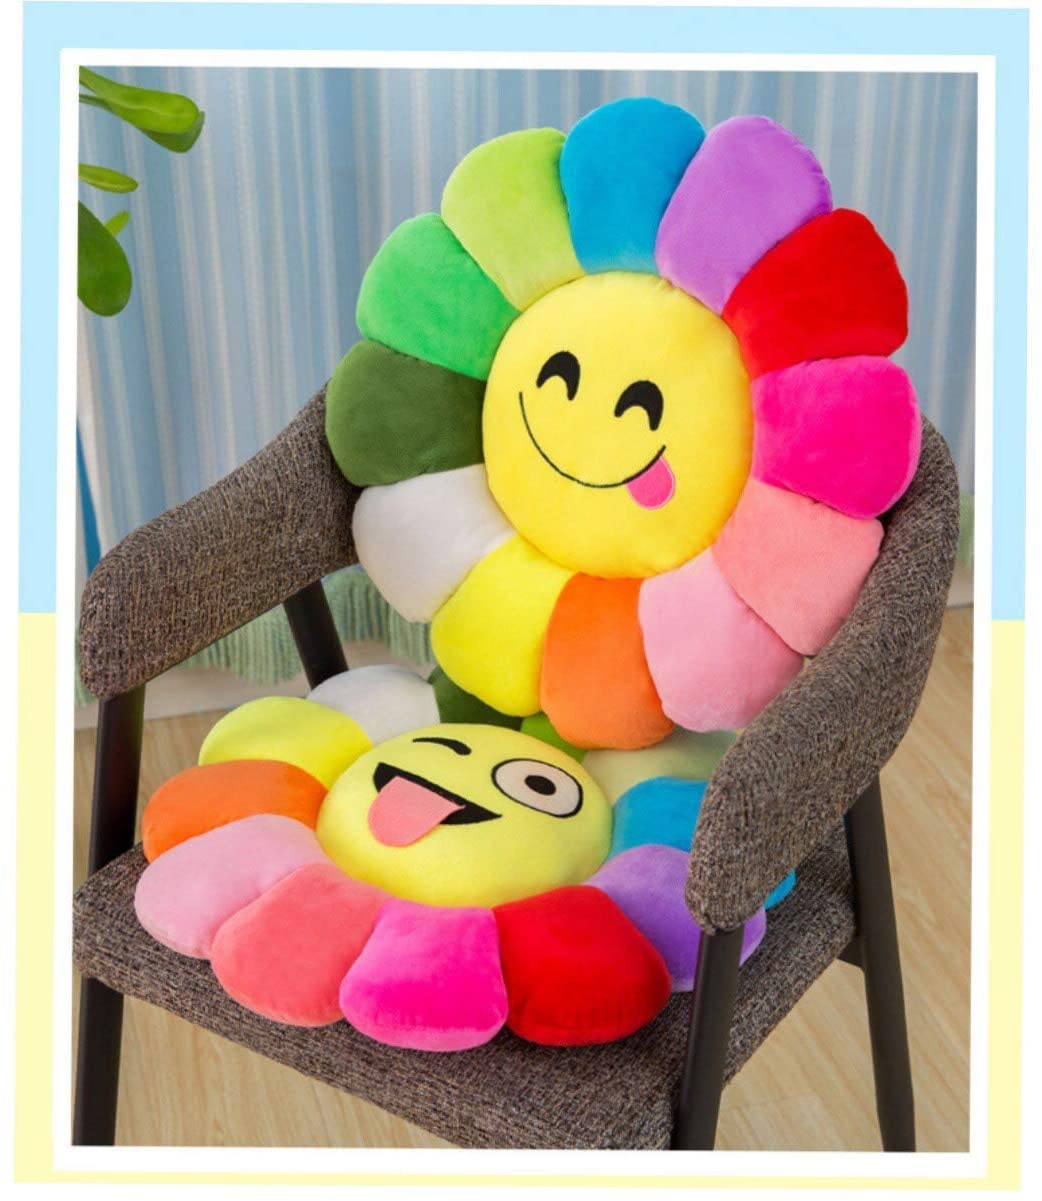 LAMANSH Multicolor / Velvet / 2 LAMANSH® Soft Velvet Sunflower Fiber Filled Smiley Back Seat Cushions, Use in Kids Playing, Room Decorate, Set of 2 Pieces,